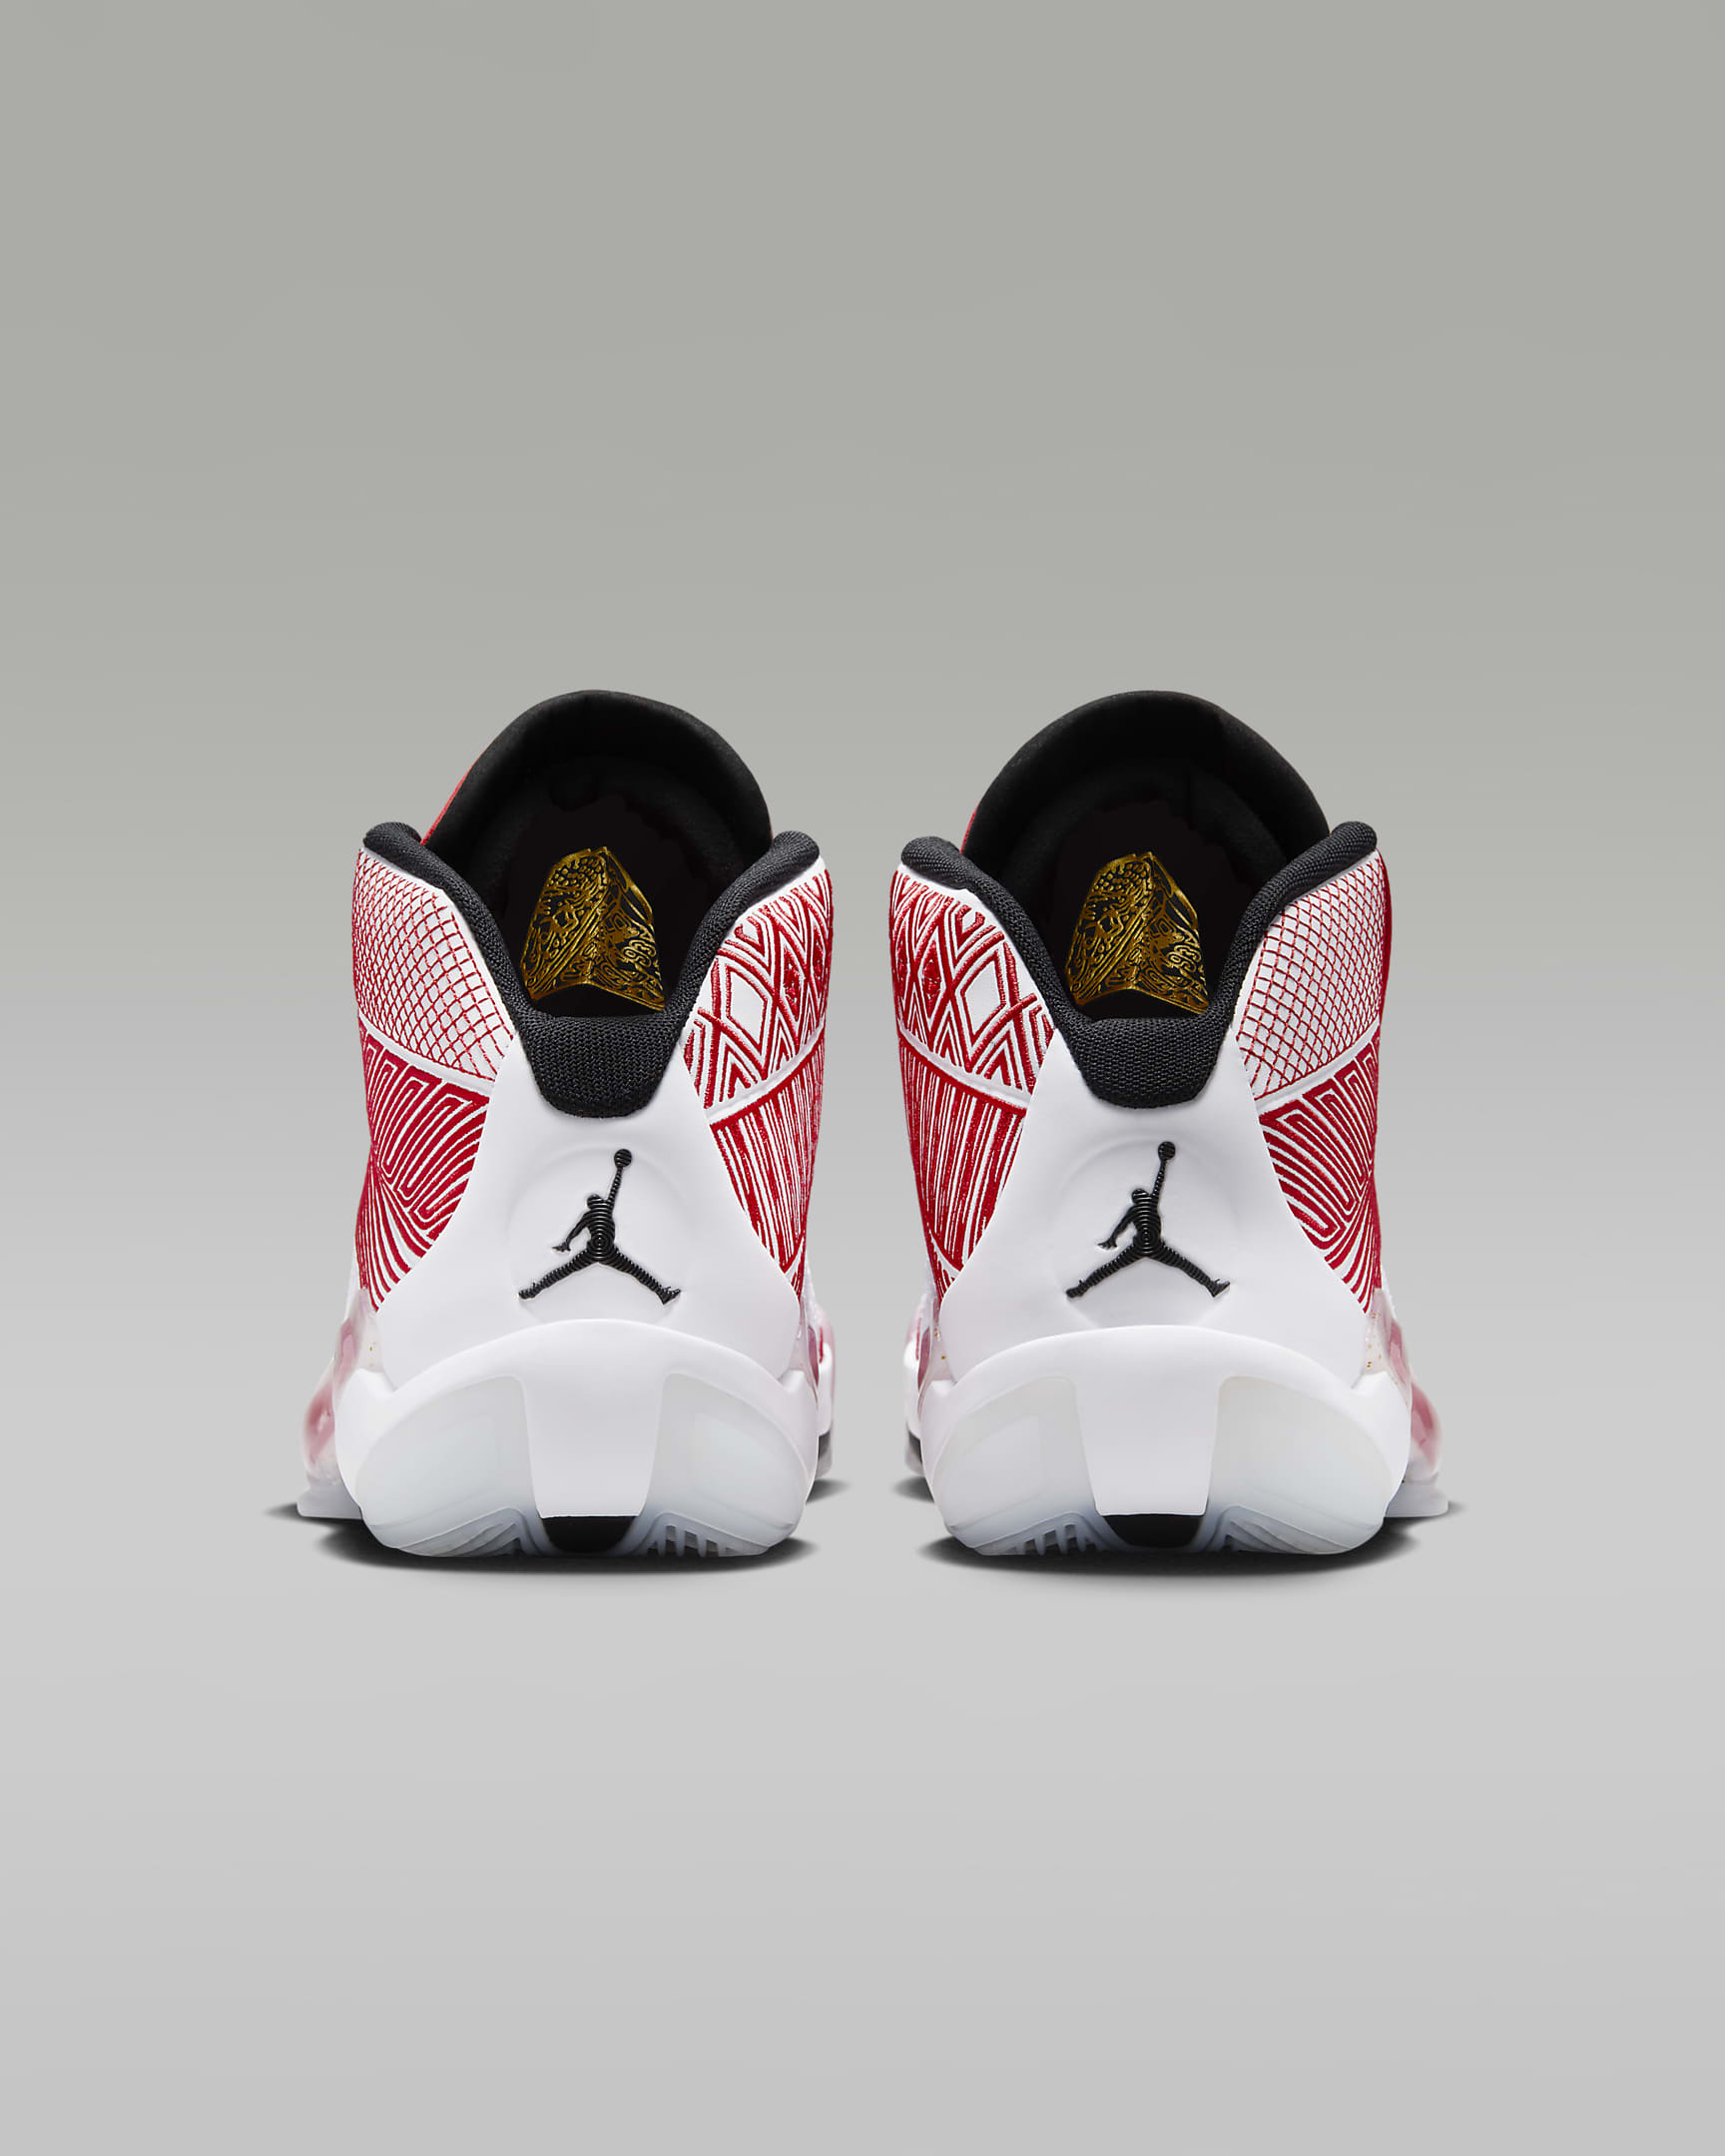 Air Jordan XXXVIII "Celebration" Zapatillas de baloncesto - Blanco/University Red/Oro metalizado/Negro